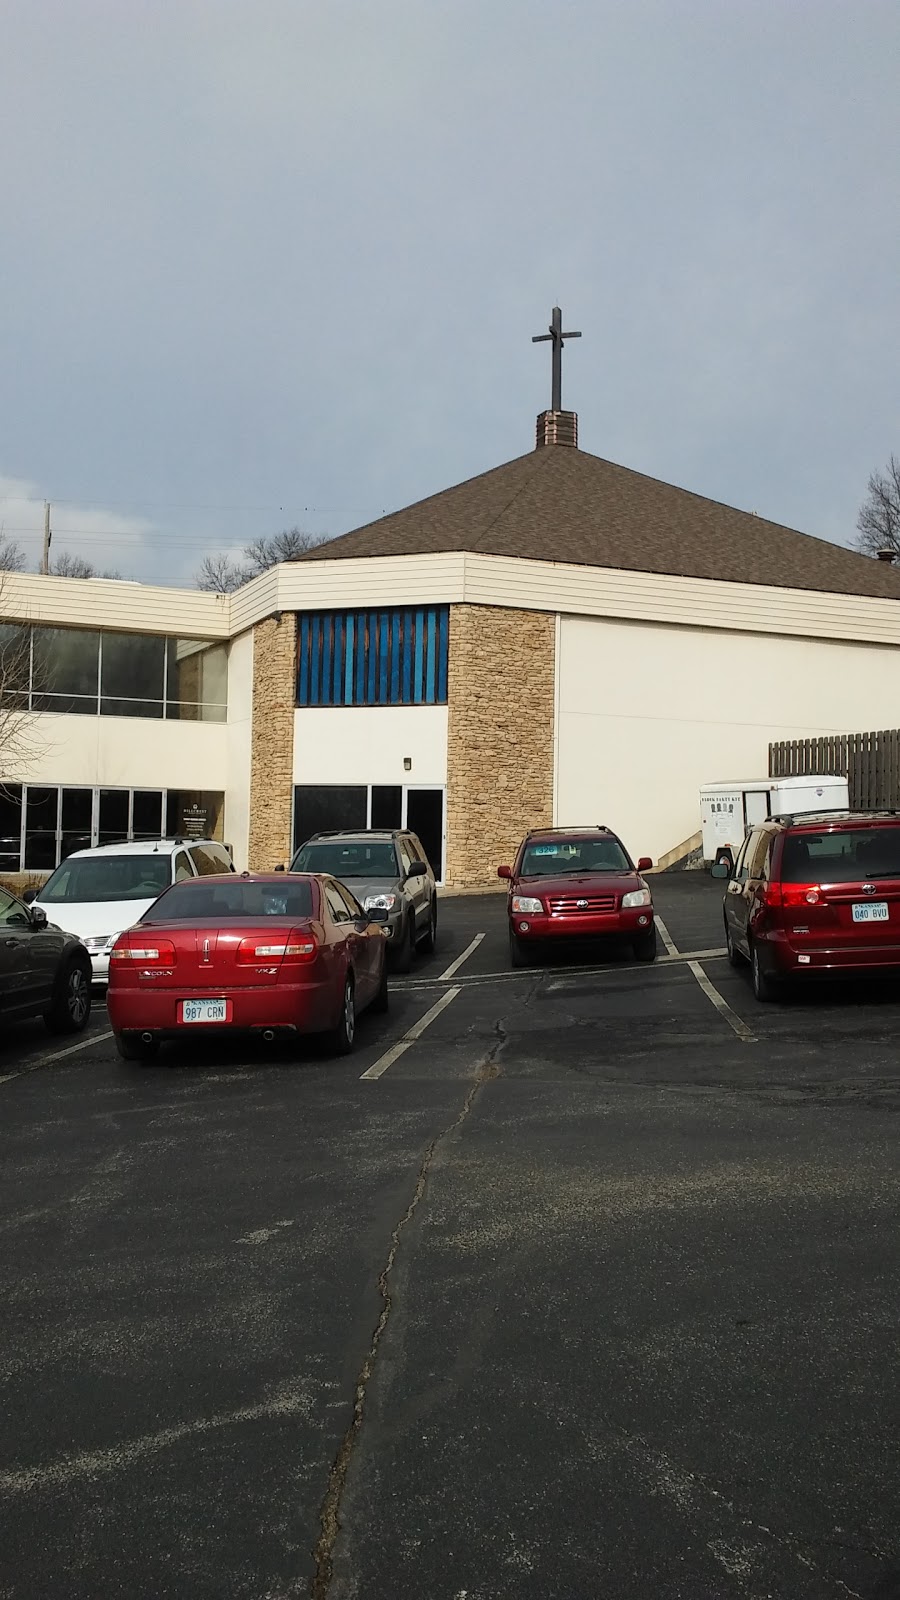 Hillcrest Covenant Church | 8801 Nall Ave, Prairie Village, KS 66207, USA | Phone: (913) 901-2300